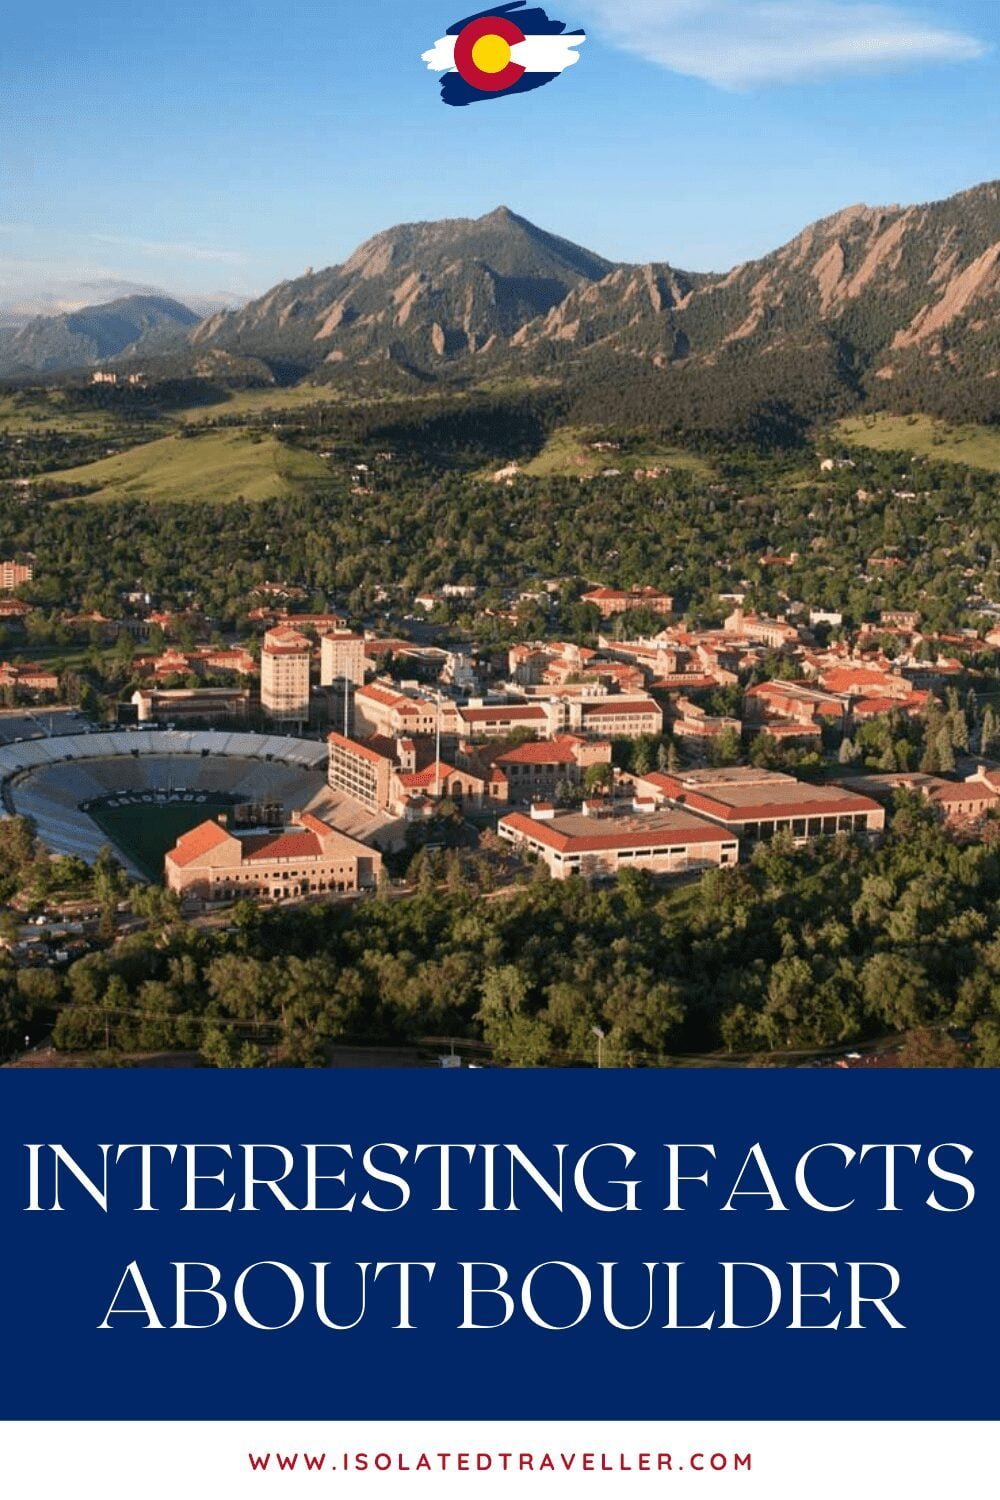 Facts About Boulder